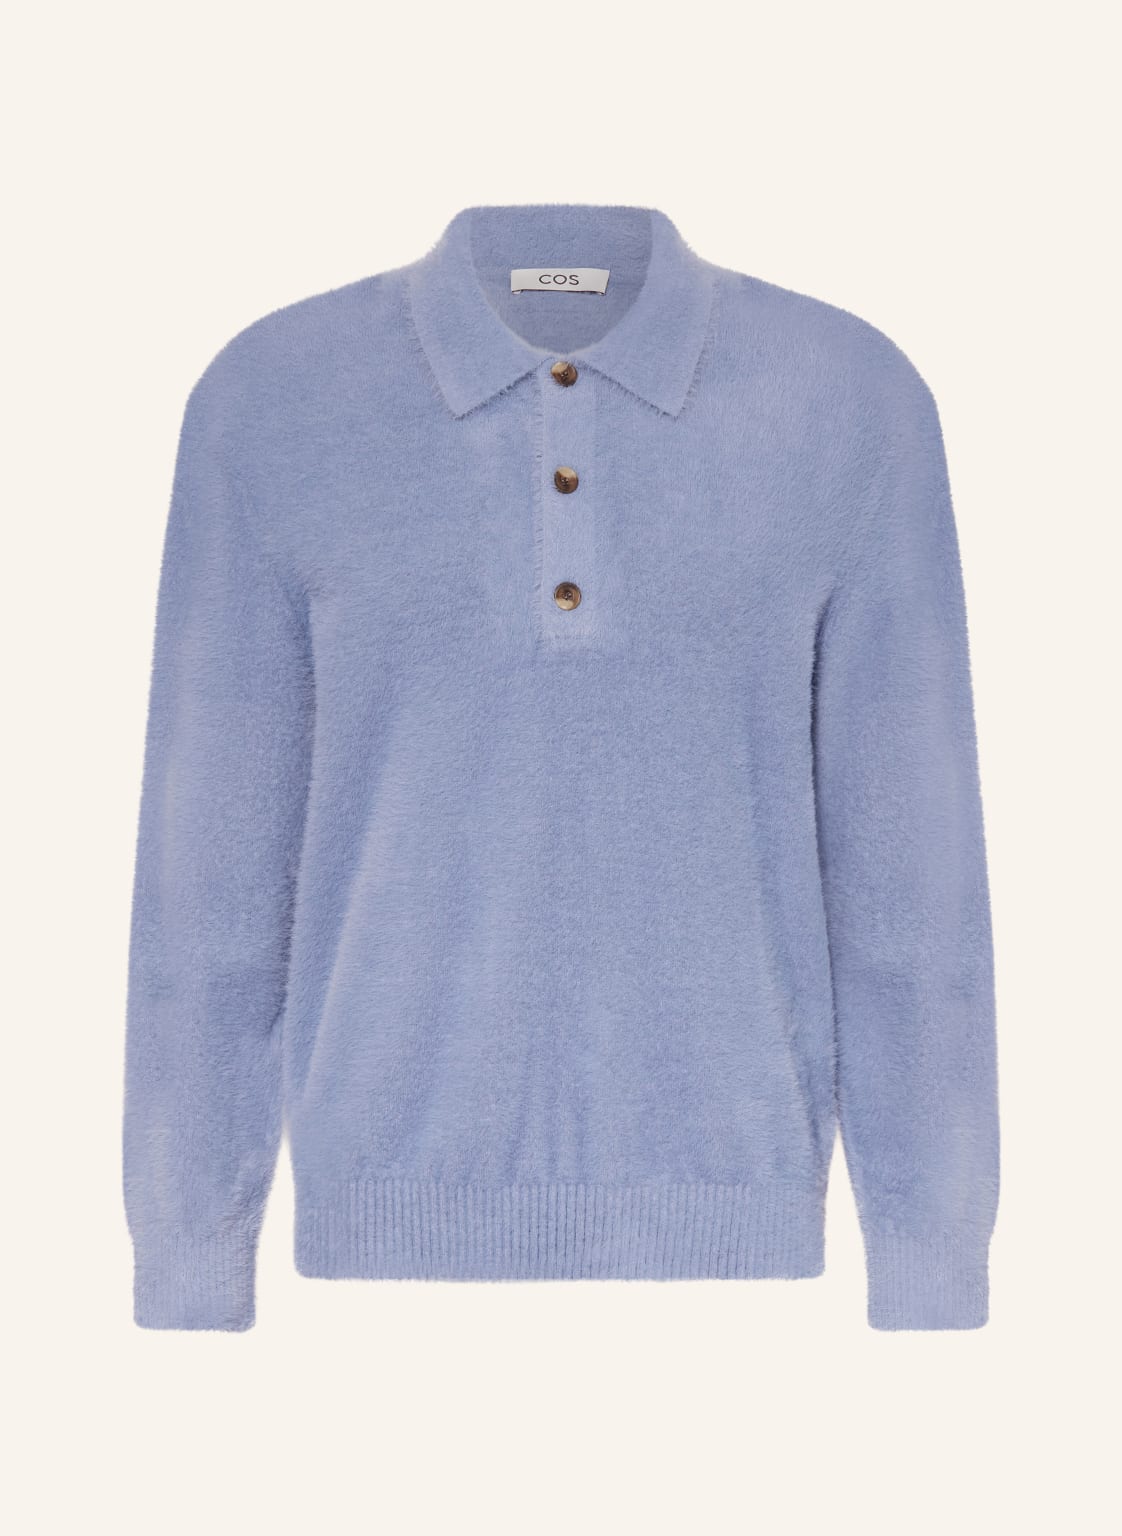 Cos Strick-Poloshirt Relaxed Fit blau von COS